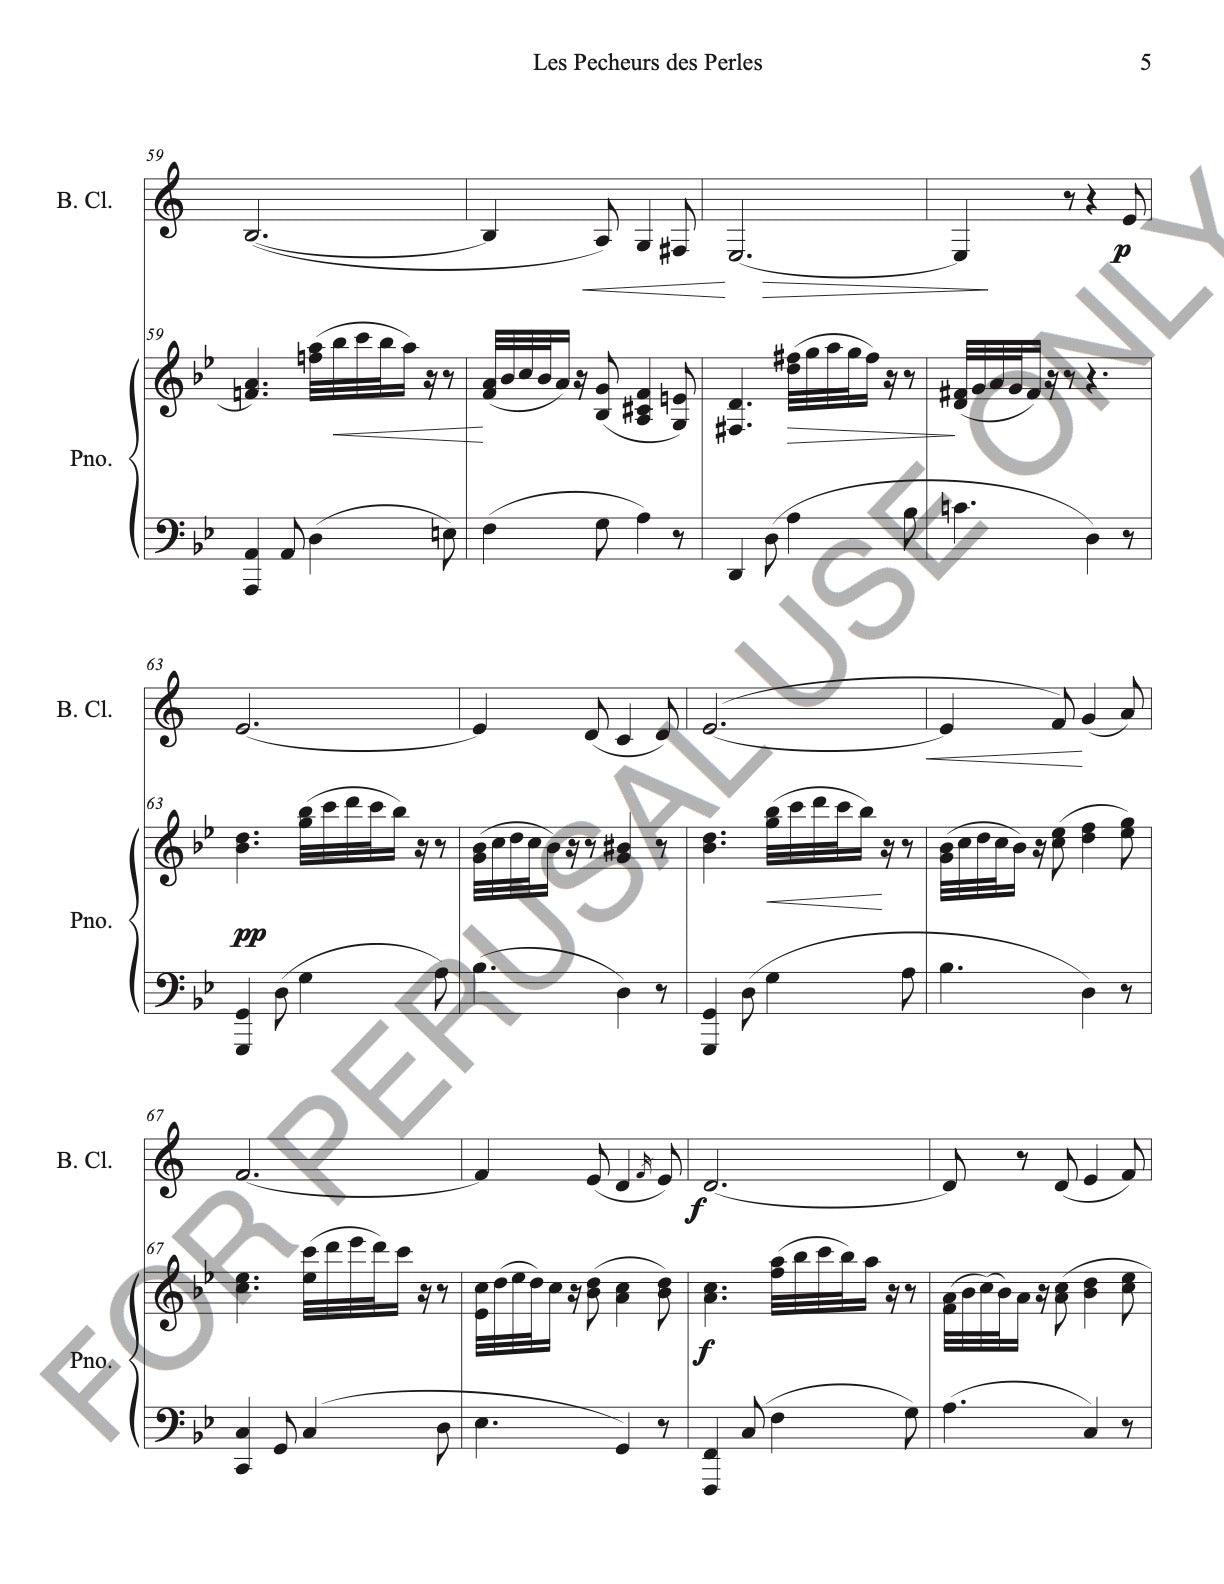 Bass Clarinet and Piano sheet music: Je crois entendre encore from Les Pecheurs de Perles - ChaipruckMekara